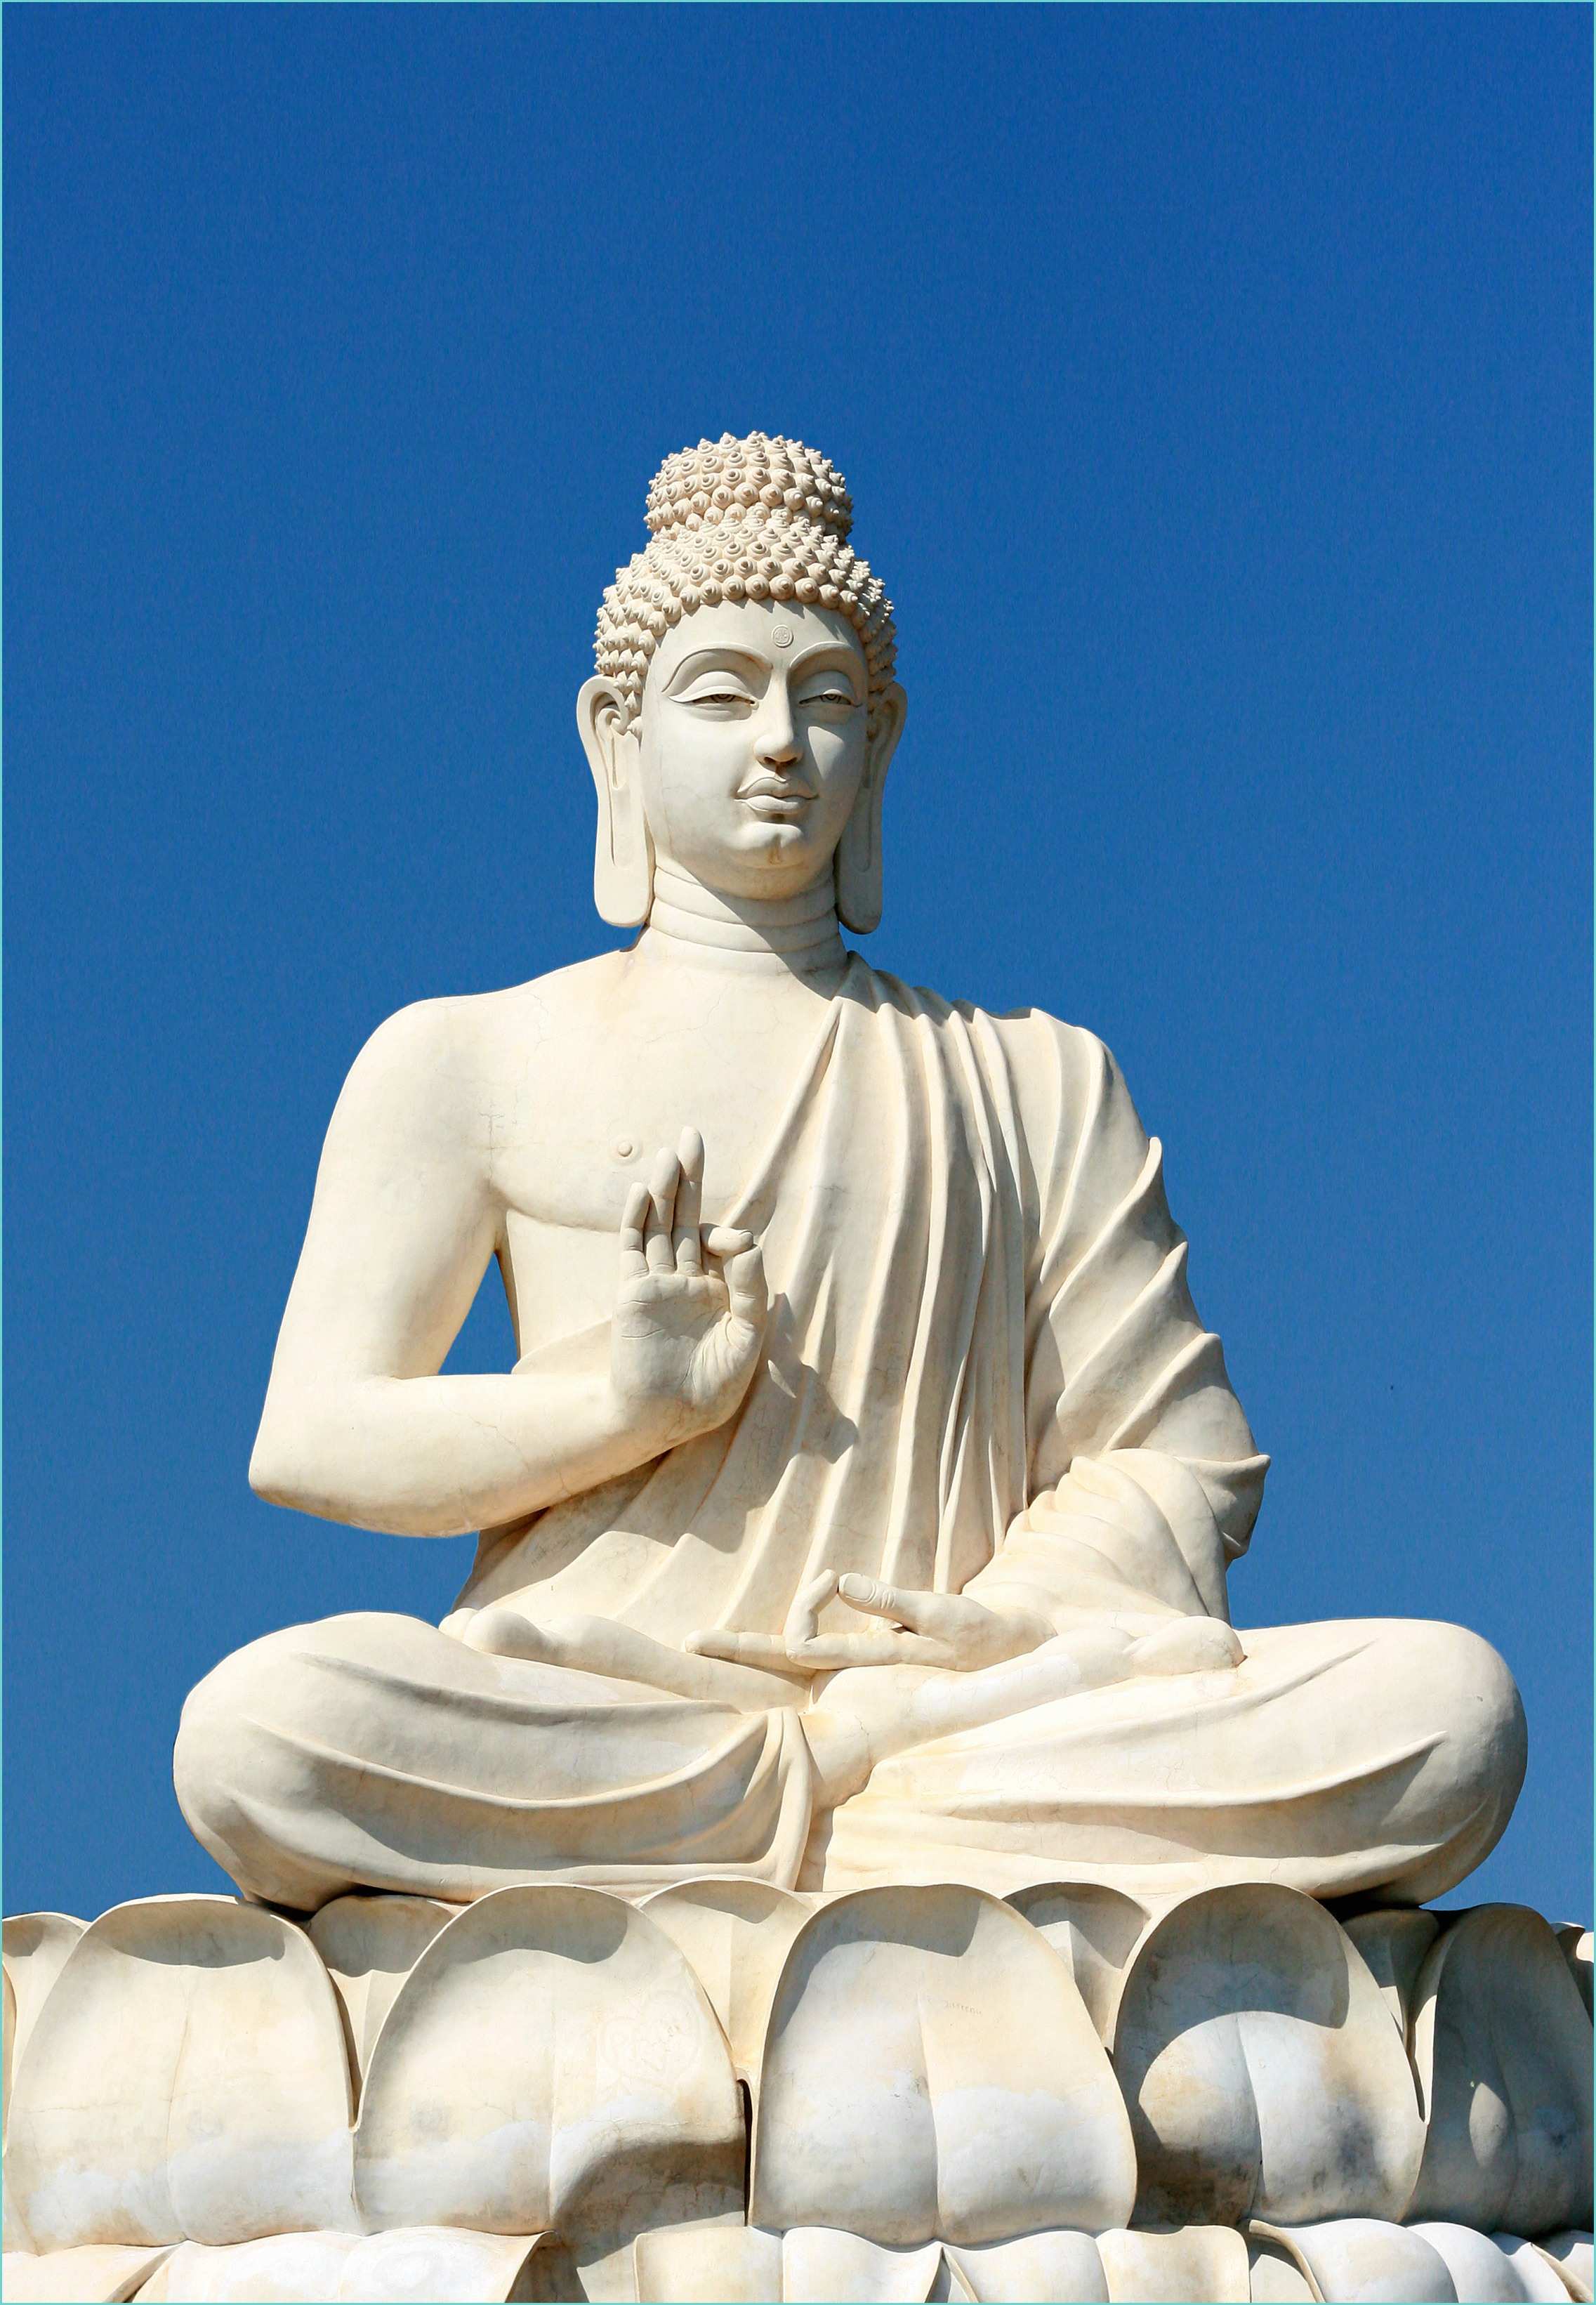 Image Zen Bouddha Myth Beliefs Discovering Buddha S Birth Date